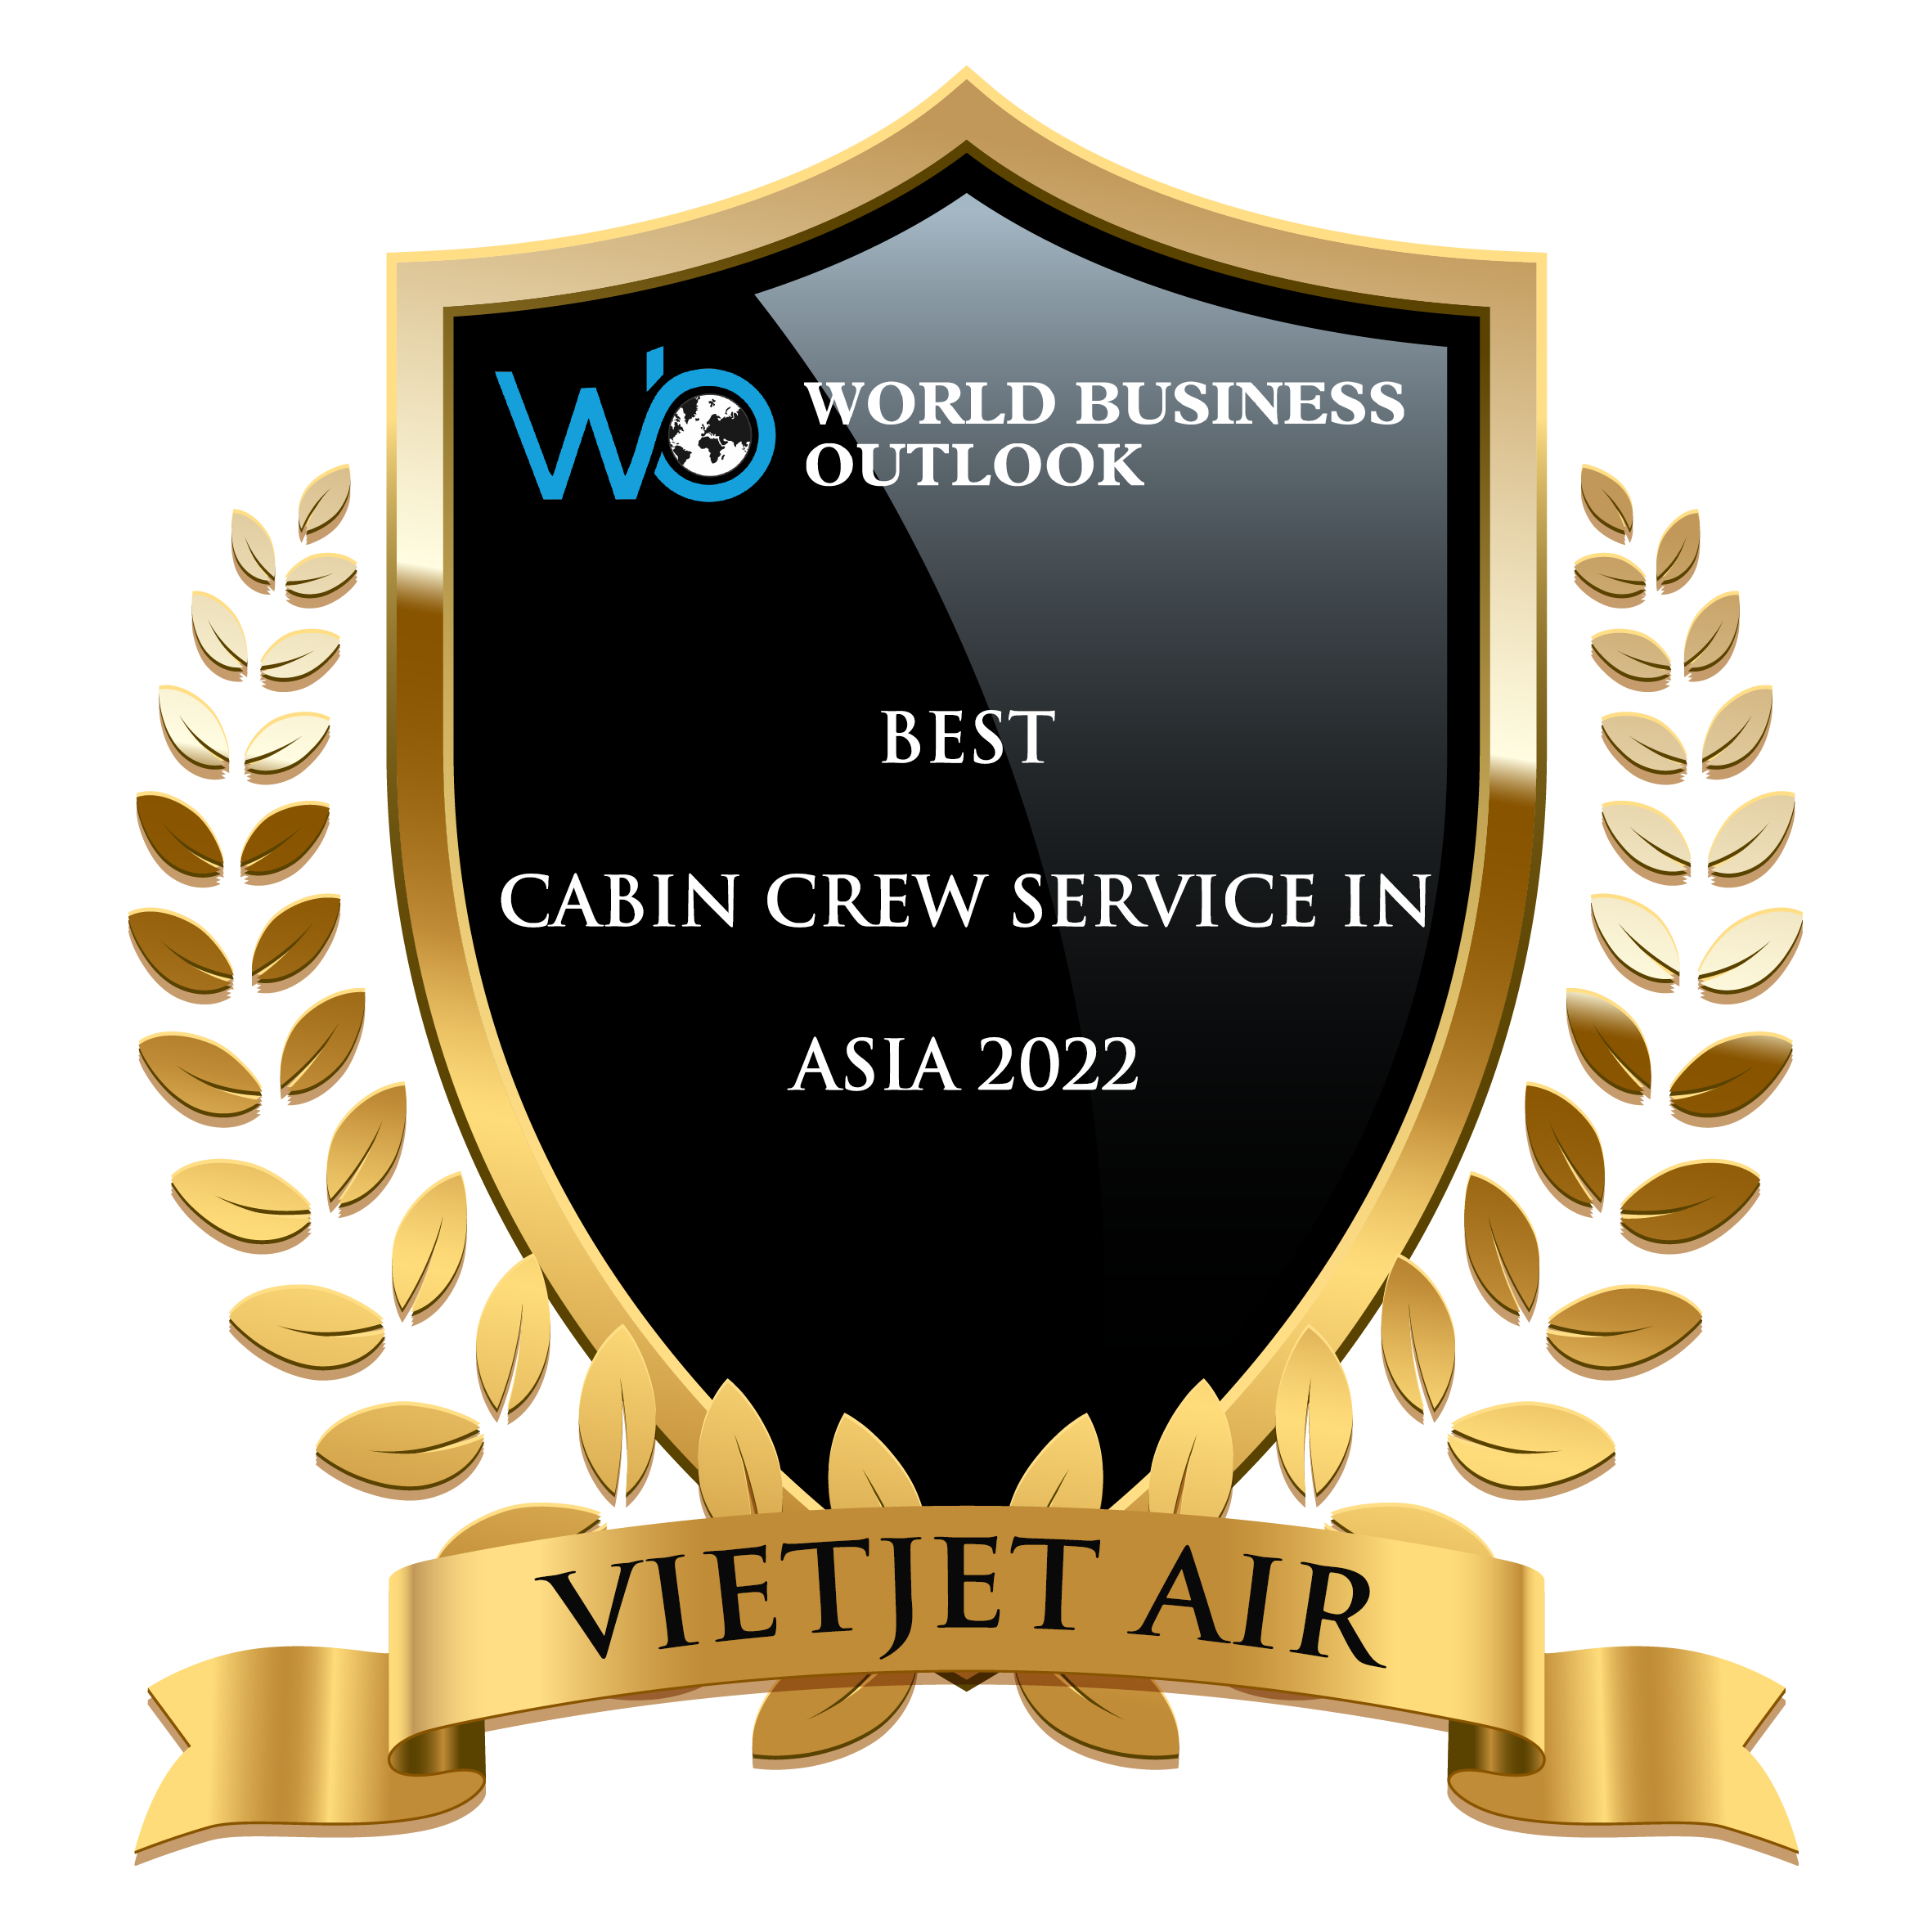 vietjet-air-best-cabin-crew-service-asia-2022-1669628421.png